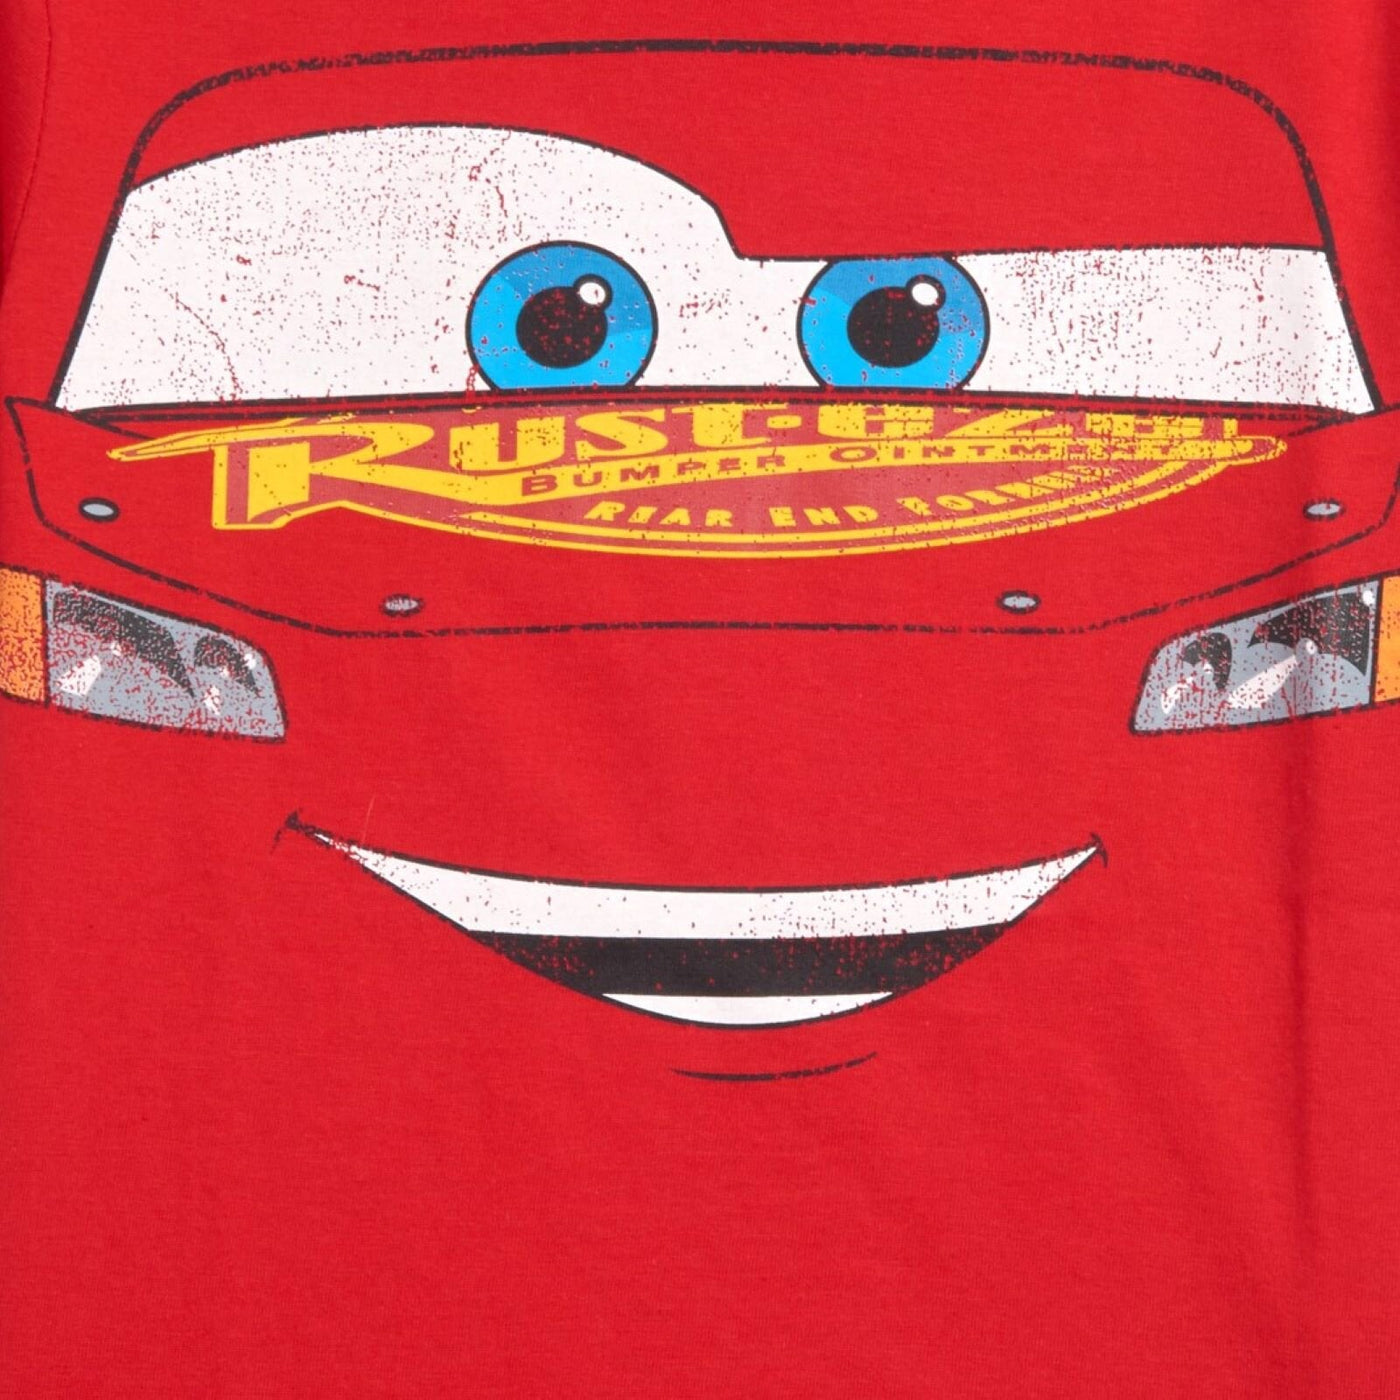 Disney Pixar Cars Lightning McQueen 3 Pack Graphic T-Shirts - imagikids